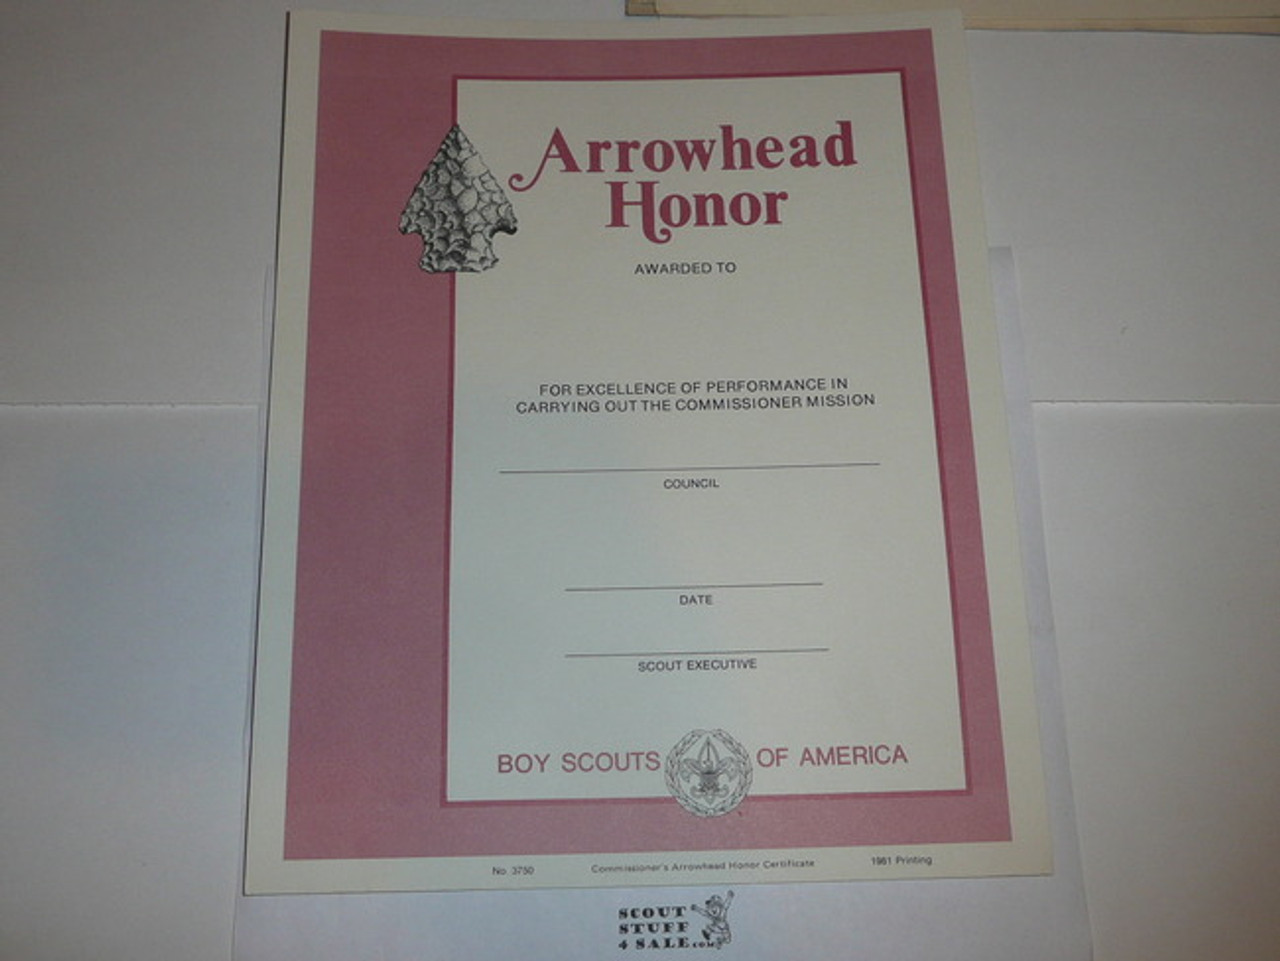 1975 Arrowhead Commissioner Award Training Certificate, blank